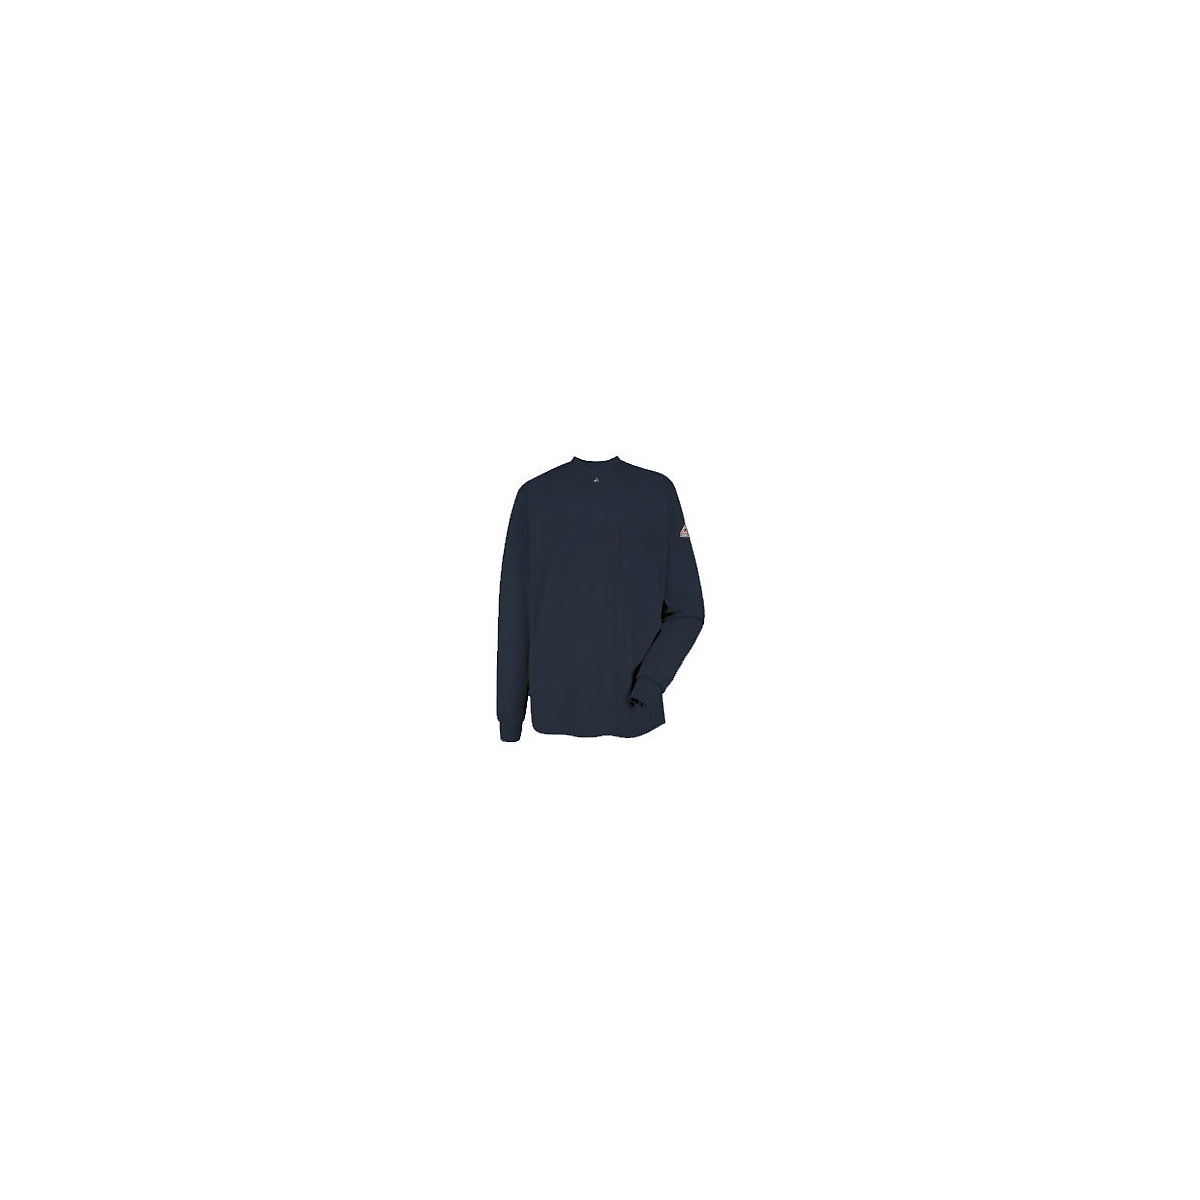 Bulwark® X-Large Regular Navy Blue EXCEL FR® Interlock FR Cotton Flame Resistant Shirt